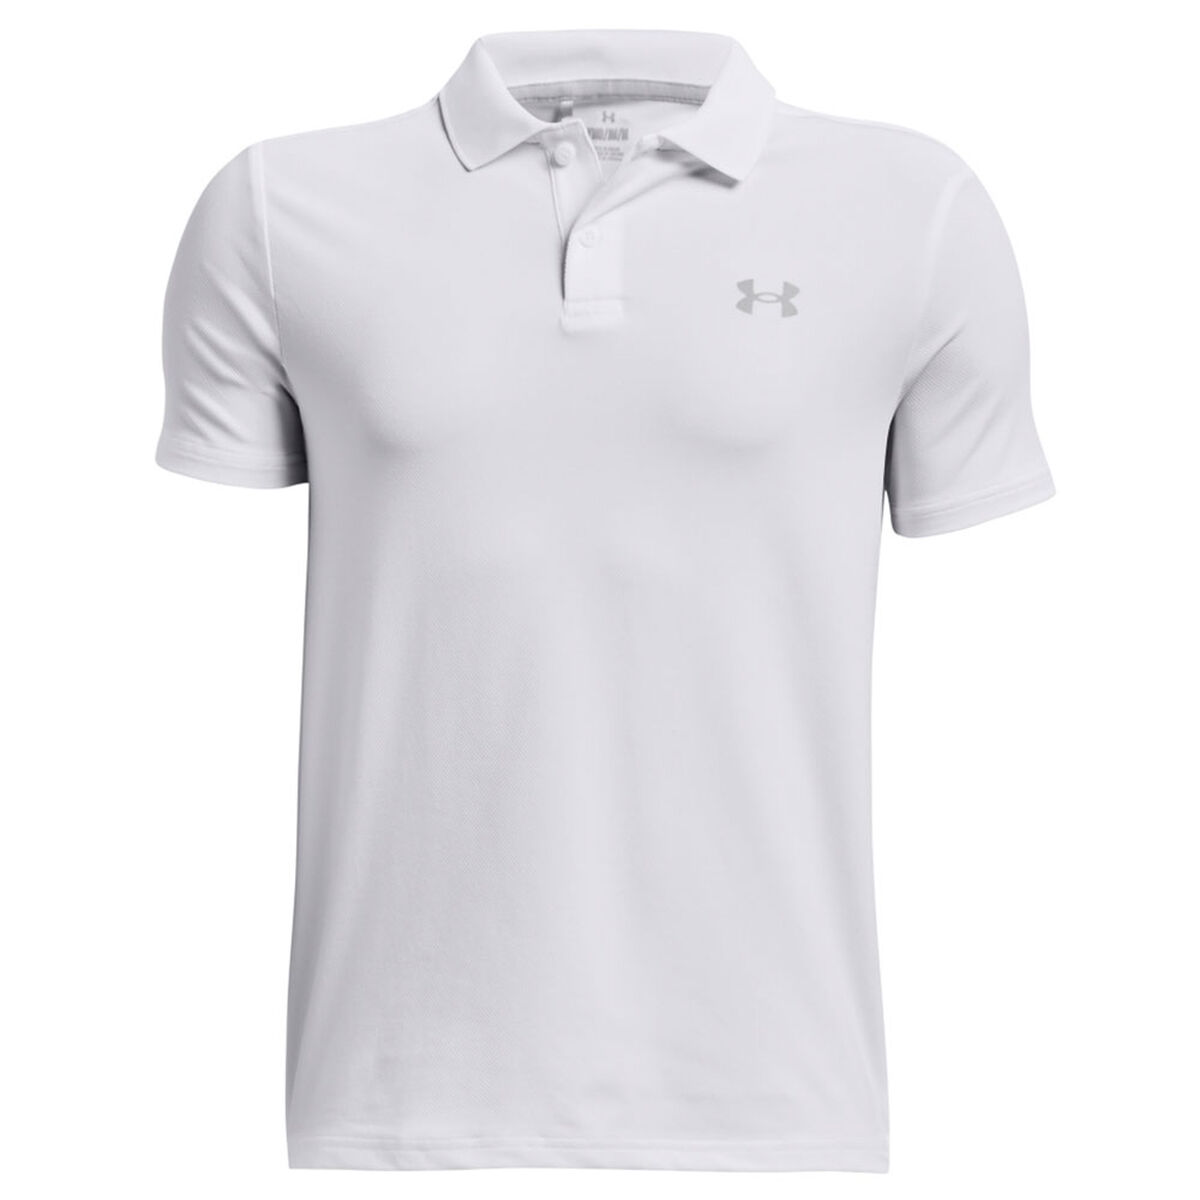 Under Armour Junior Performance Golf Polo Shirt, Unisex, White/pitch gray, 12-13 years | American Golf von Under Armour